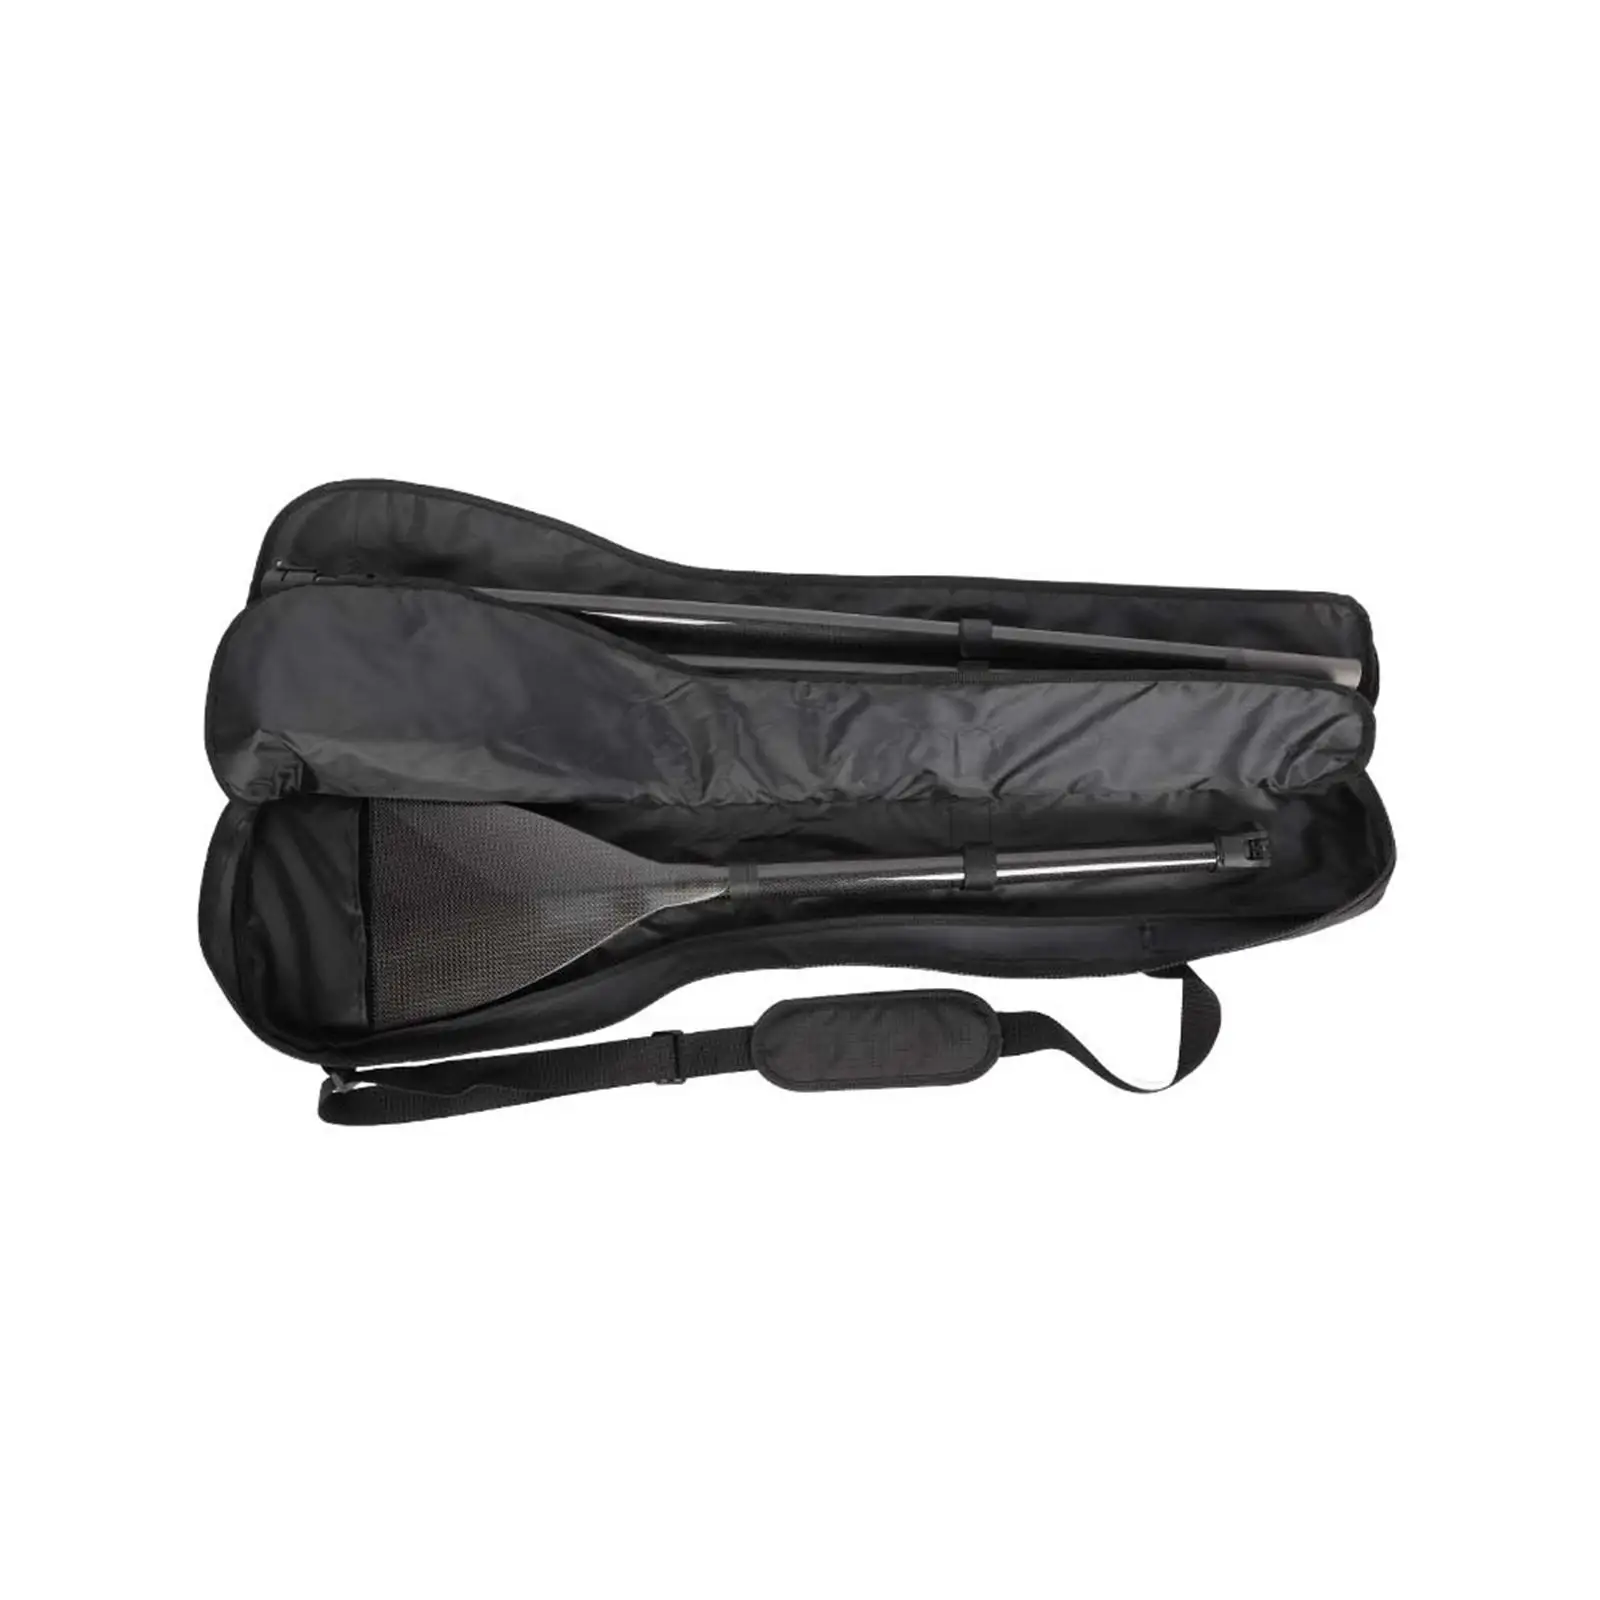 Adjustable SUP Paddle Storage Bag for 3 Piece Split Paddle Spacious Interior